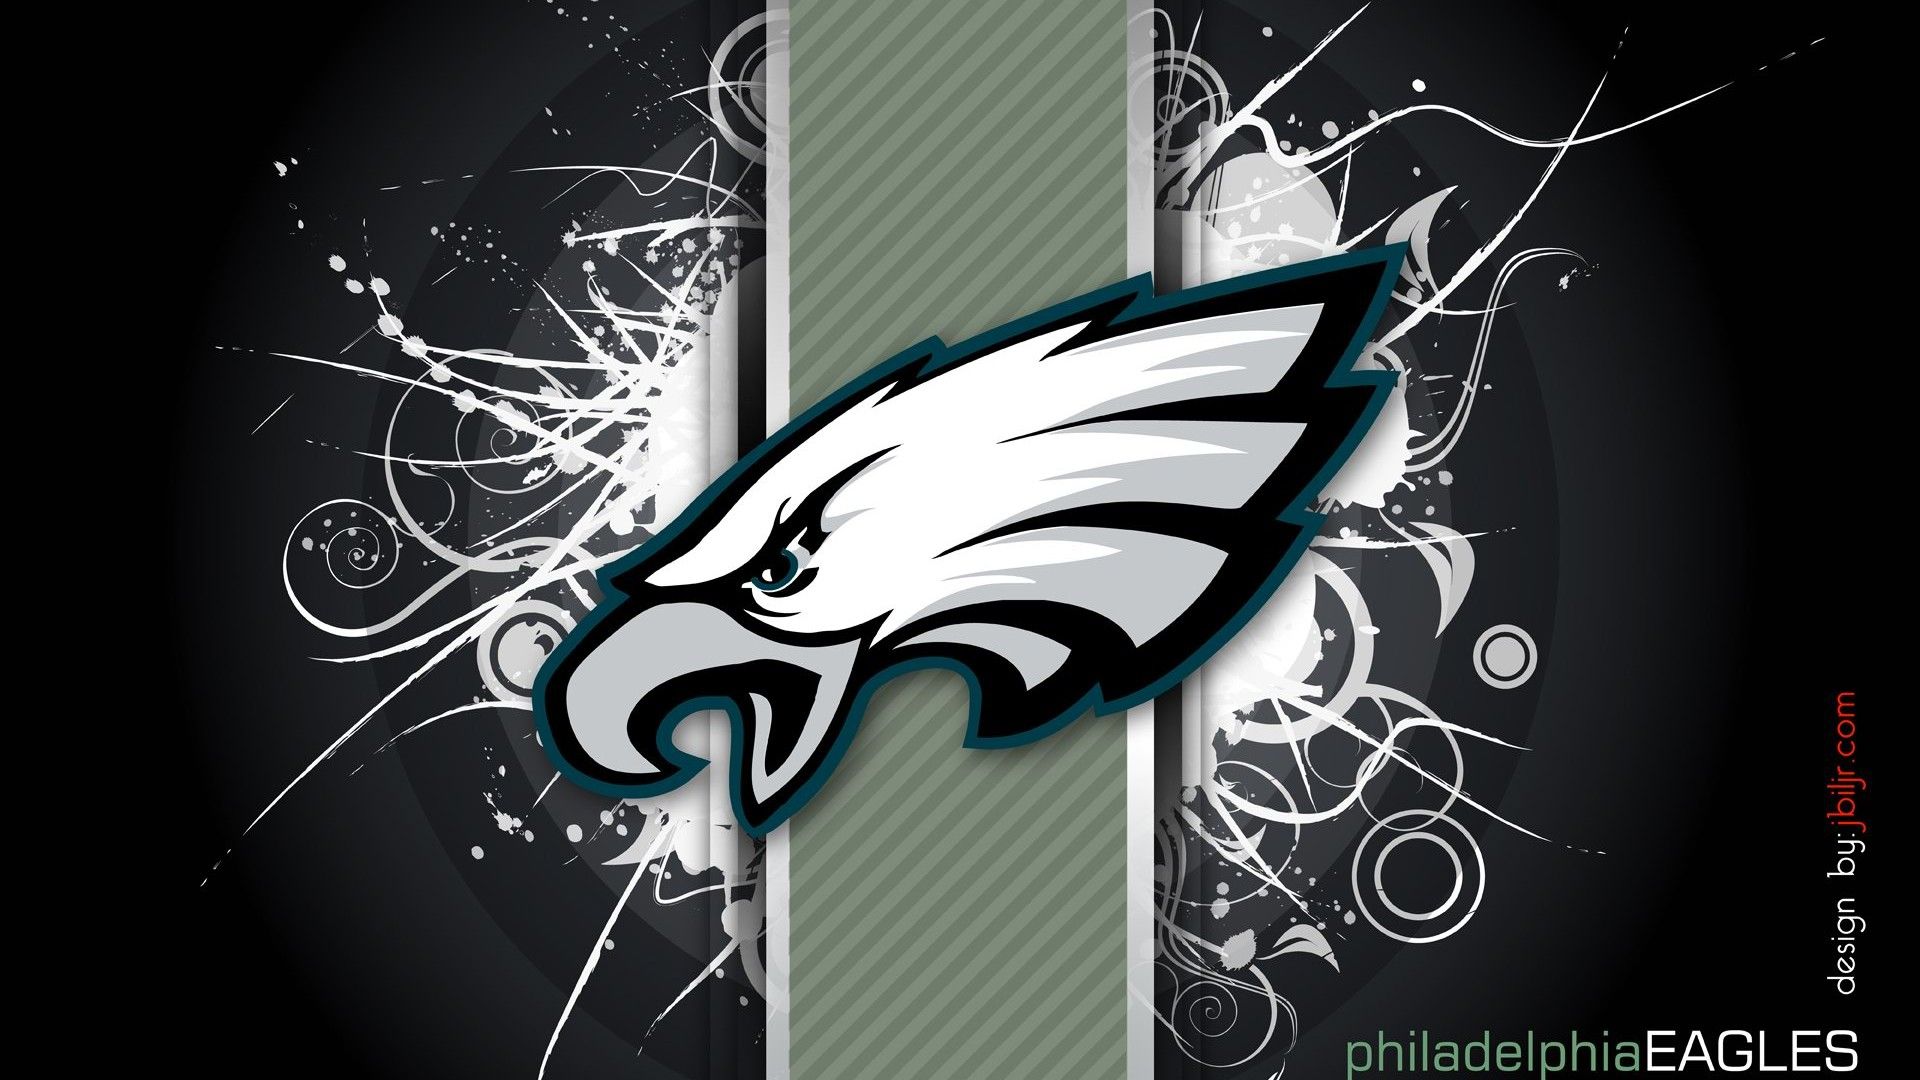 Free download Philadelphia Eagles Wallpaper Full HD Picture